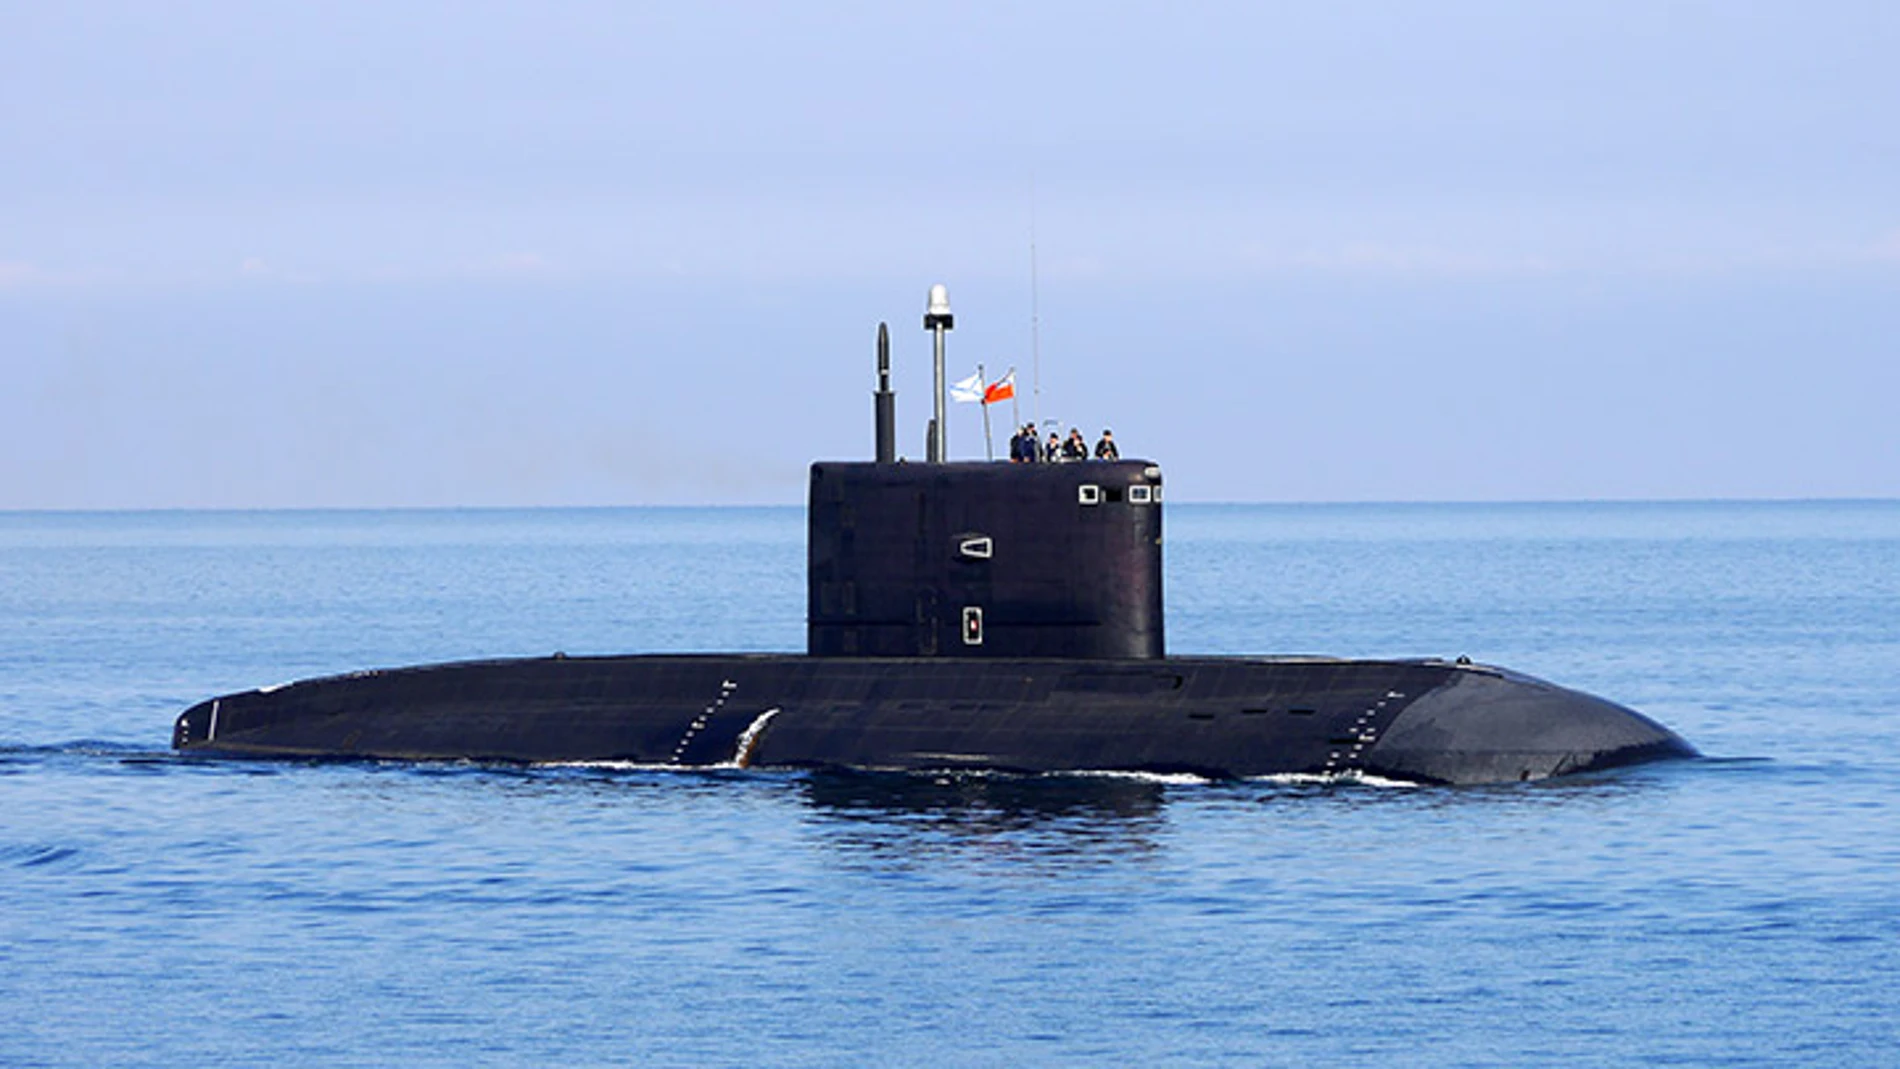 Submarino ruso B-262 Stary Oskol de la Flota del Mar Negro